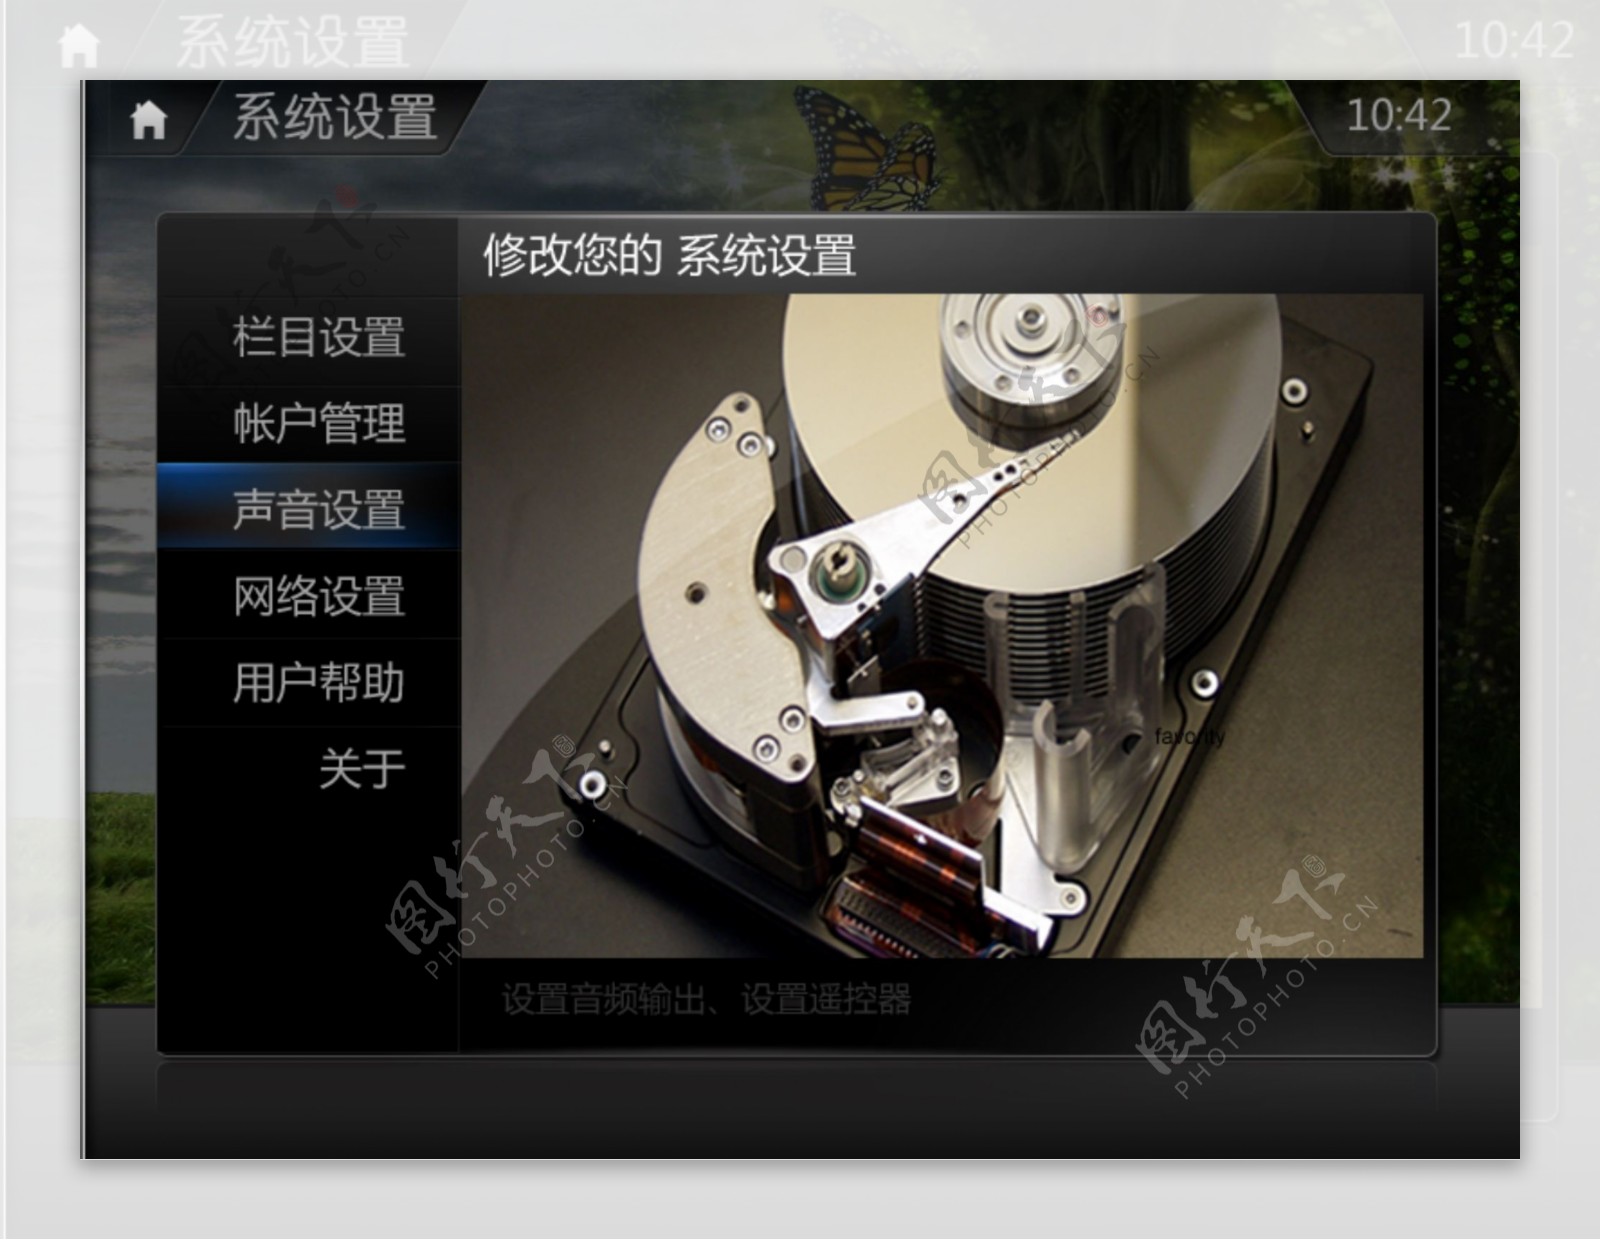 XBMC系统设置界面图片